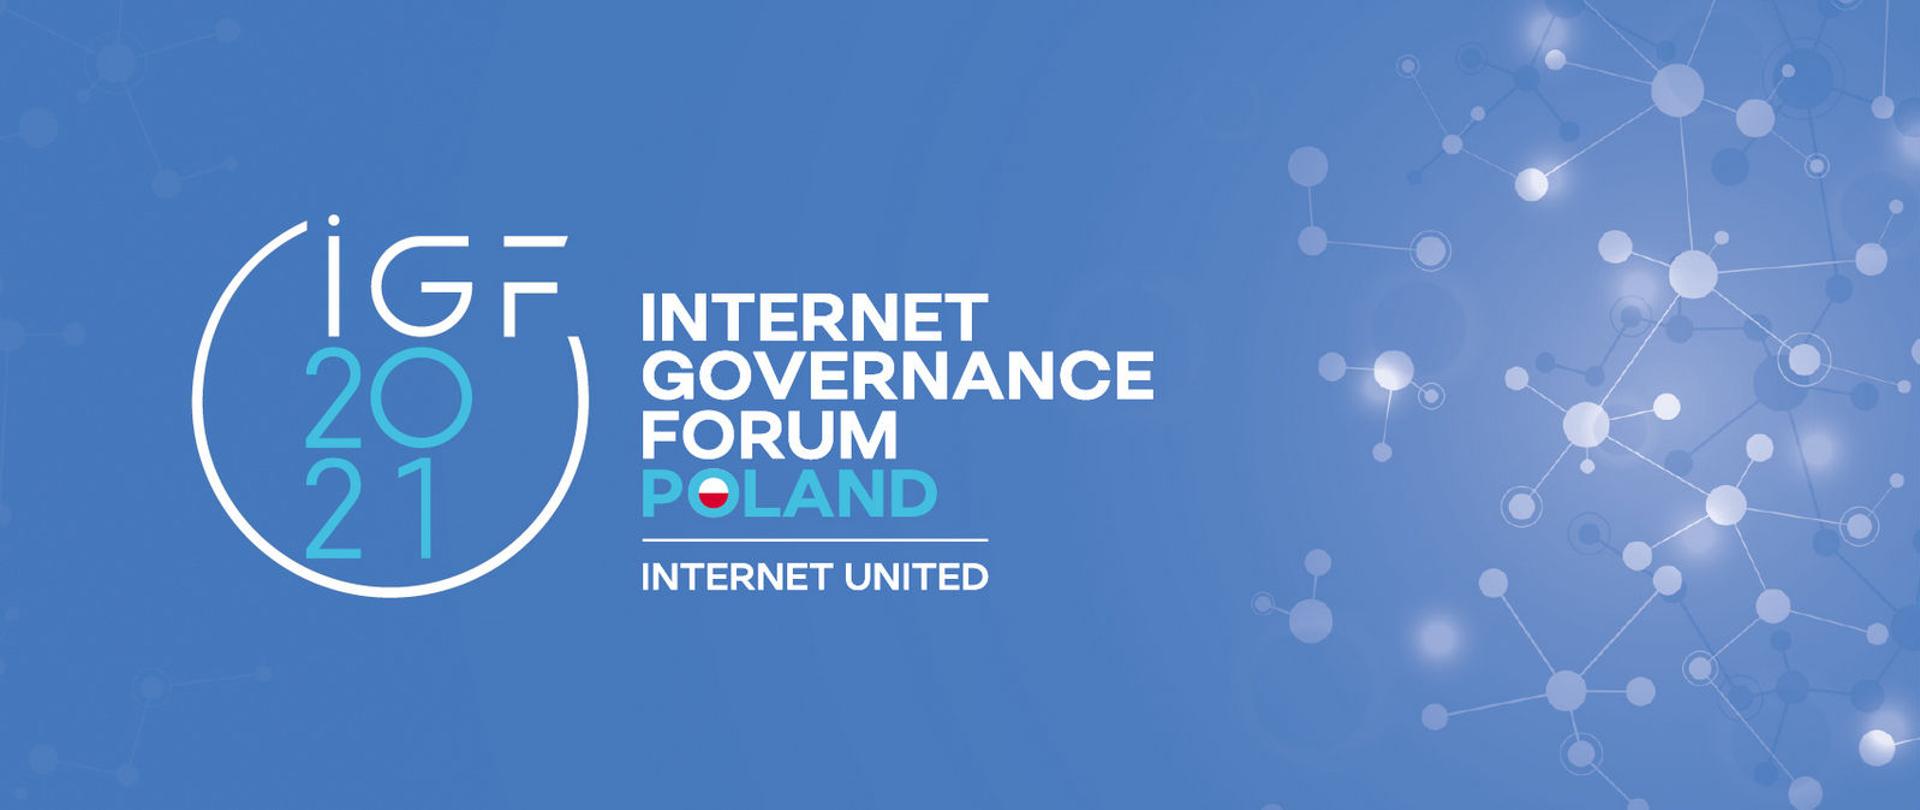 Logo IGF 2021, napis Internet Governance Forum Poland, Internet United.